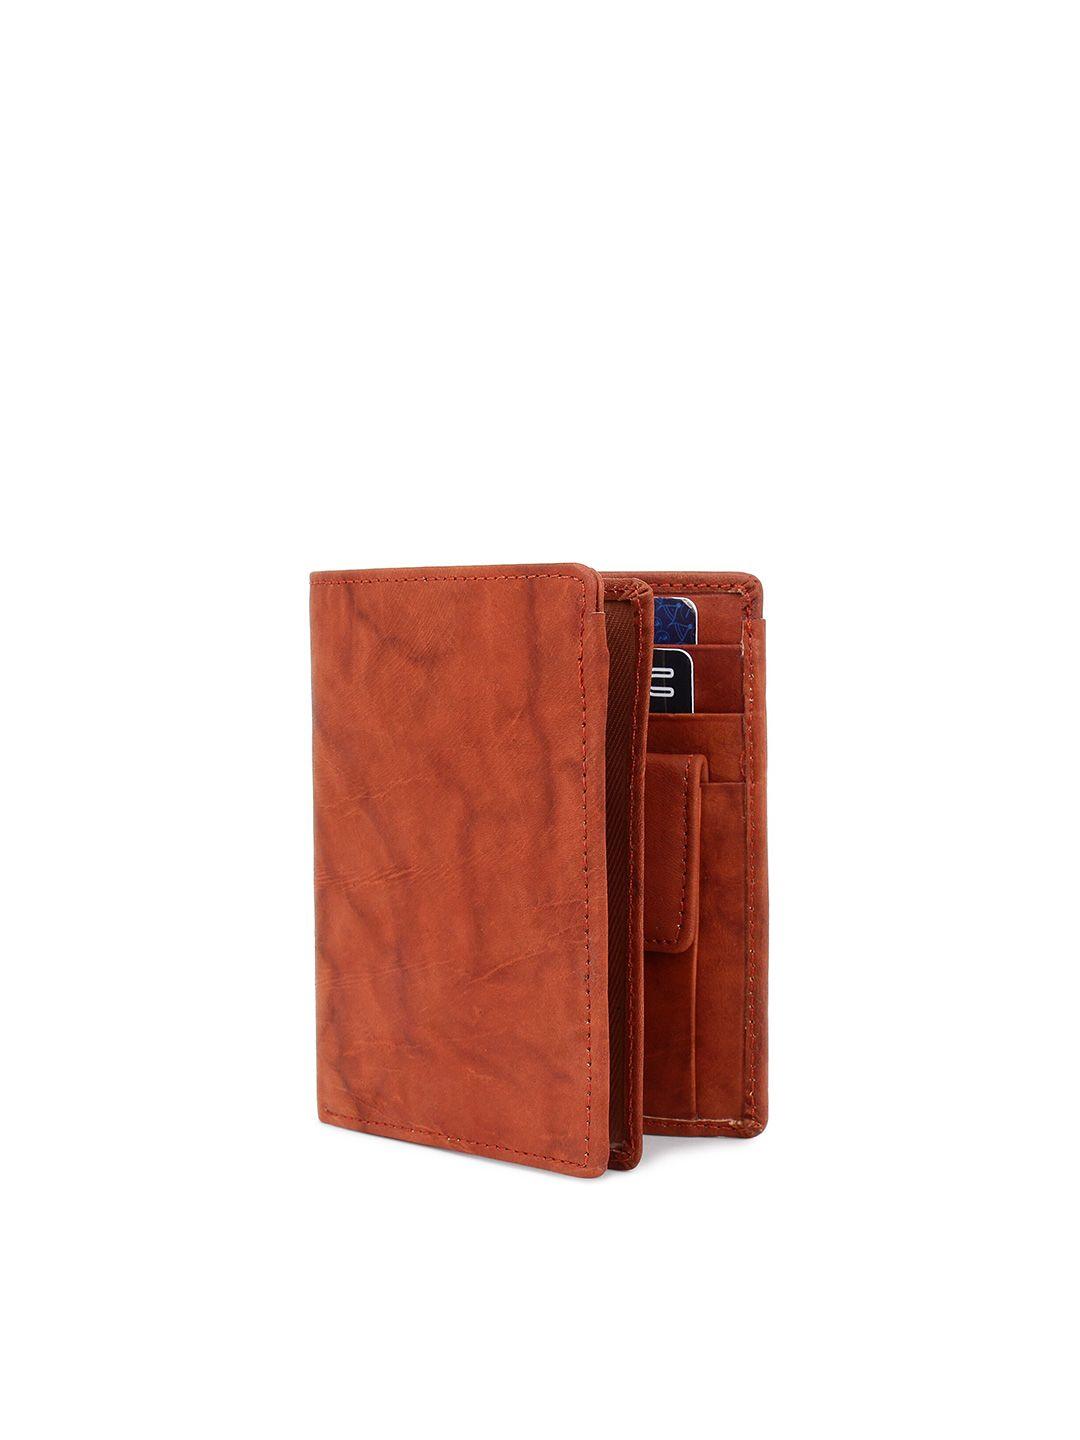 elite crafts men textured genuine leather two fold wallet